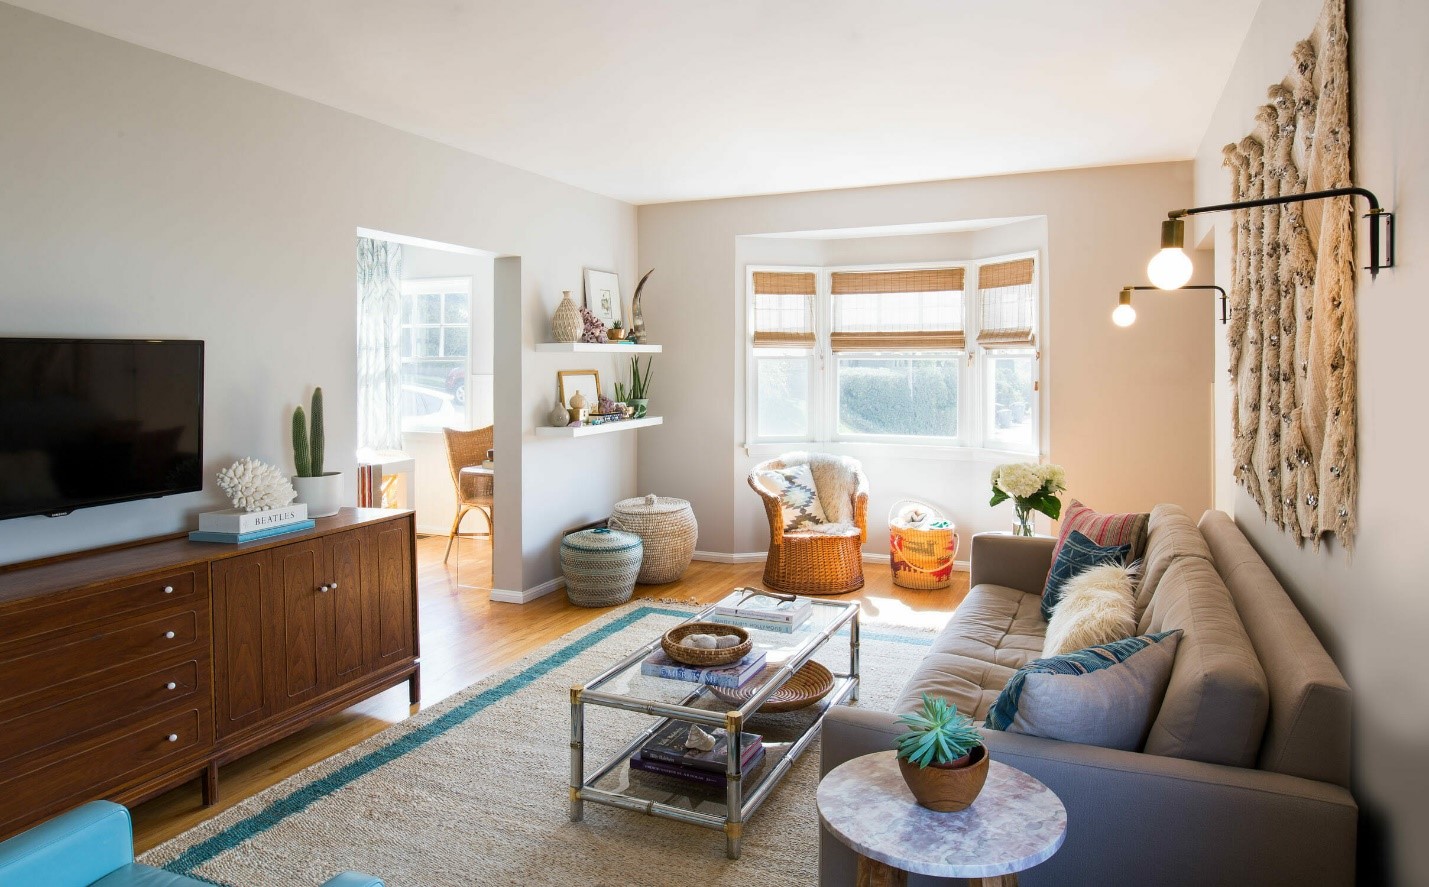 10 Tips to Arrange Furniture like a Professional Interior Designer